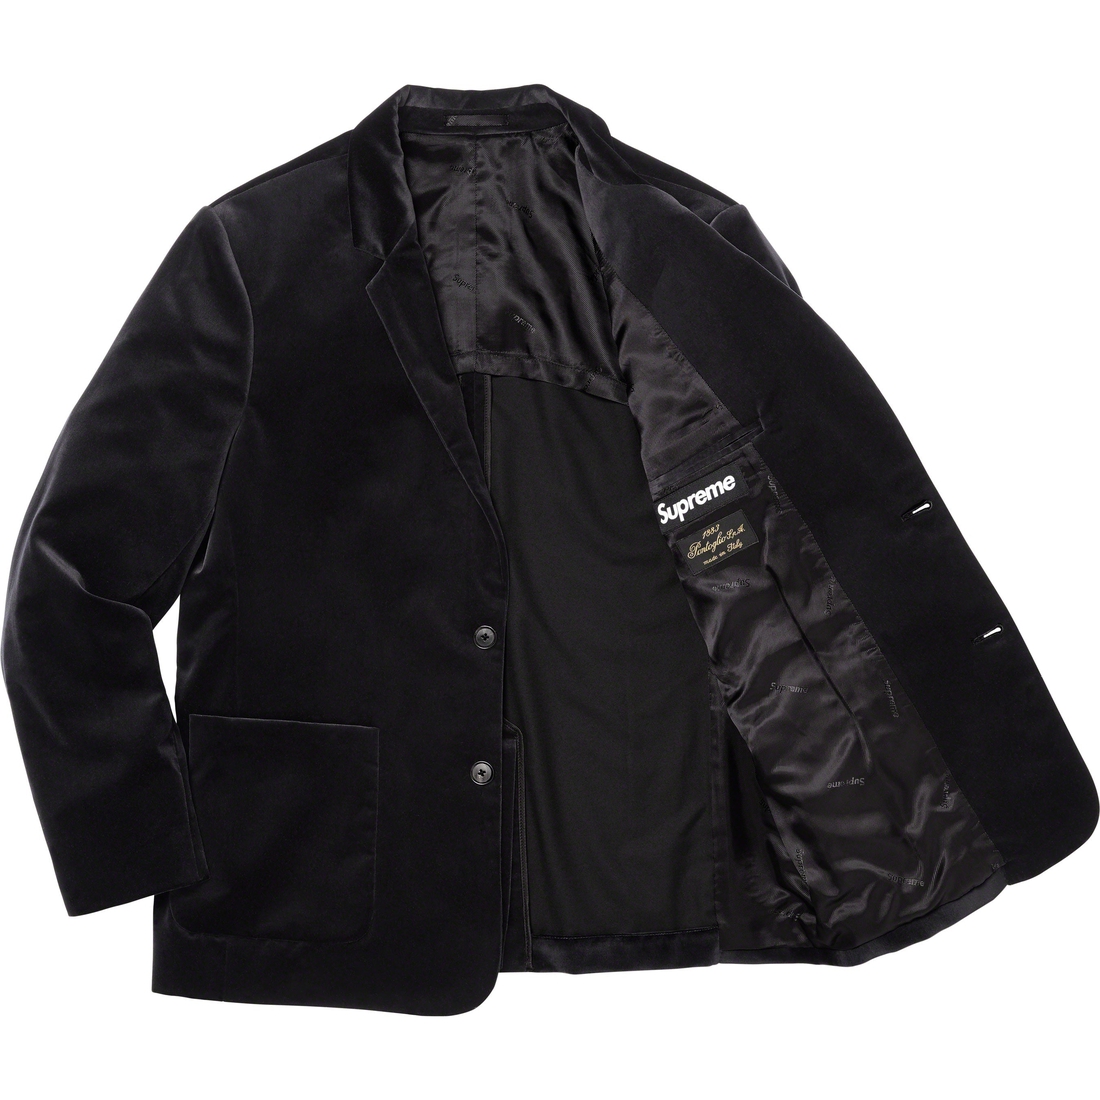 Details on Velvet Suit Black from fall winter
                                                    2023 (Price is $668)